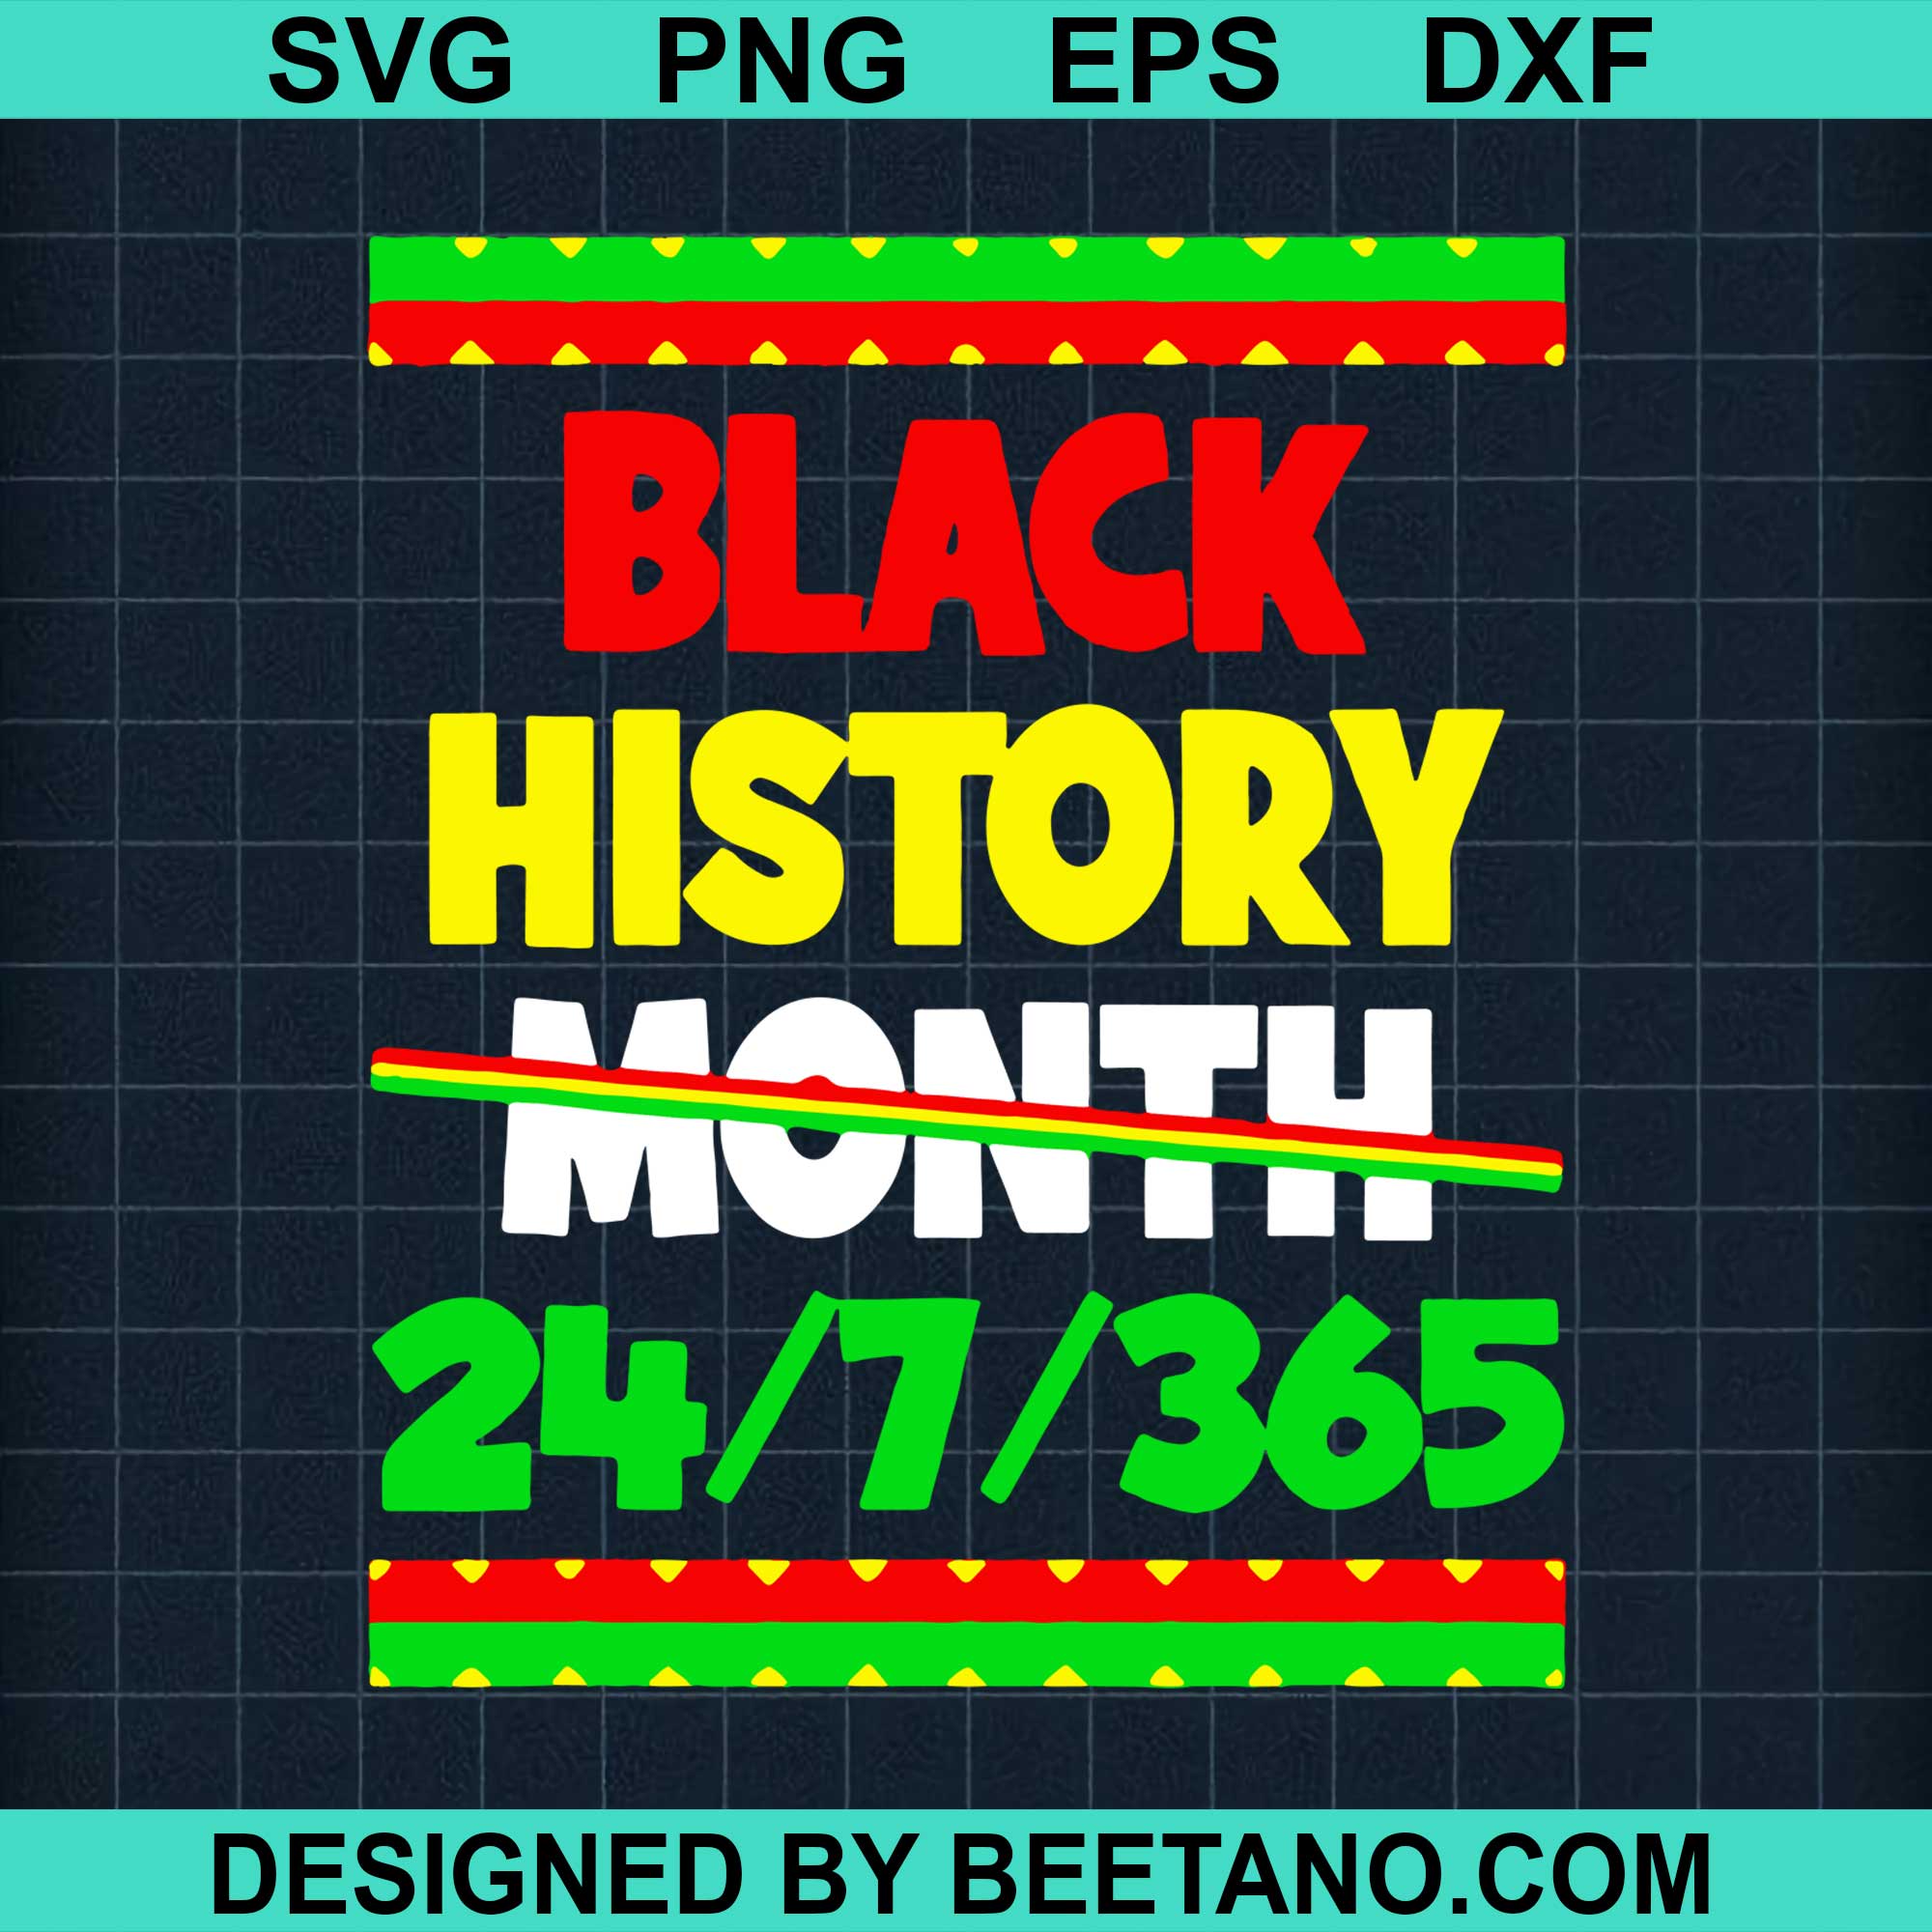 Black History Month 24 7 365 SVG cut file for cricut silhouette machine